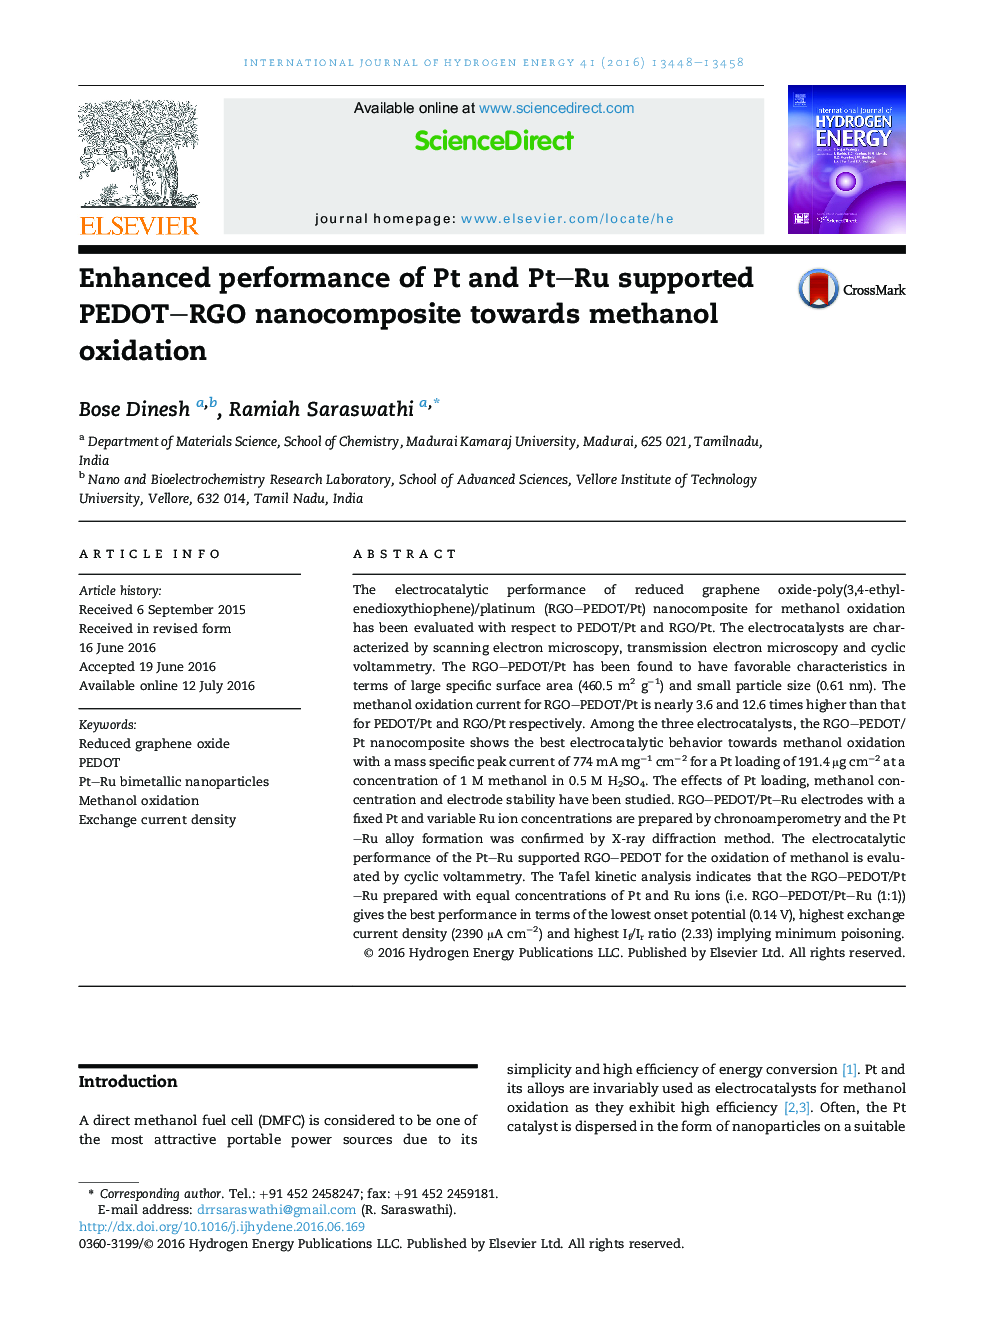 Enhanced performance of Pt and Pt–Ru supported PEDOT–RGO nanocomposite towards methanol oxidation